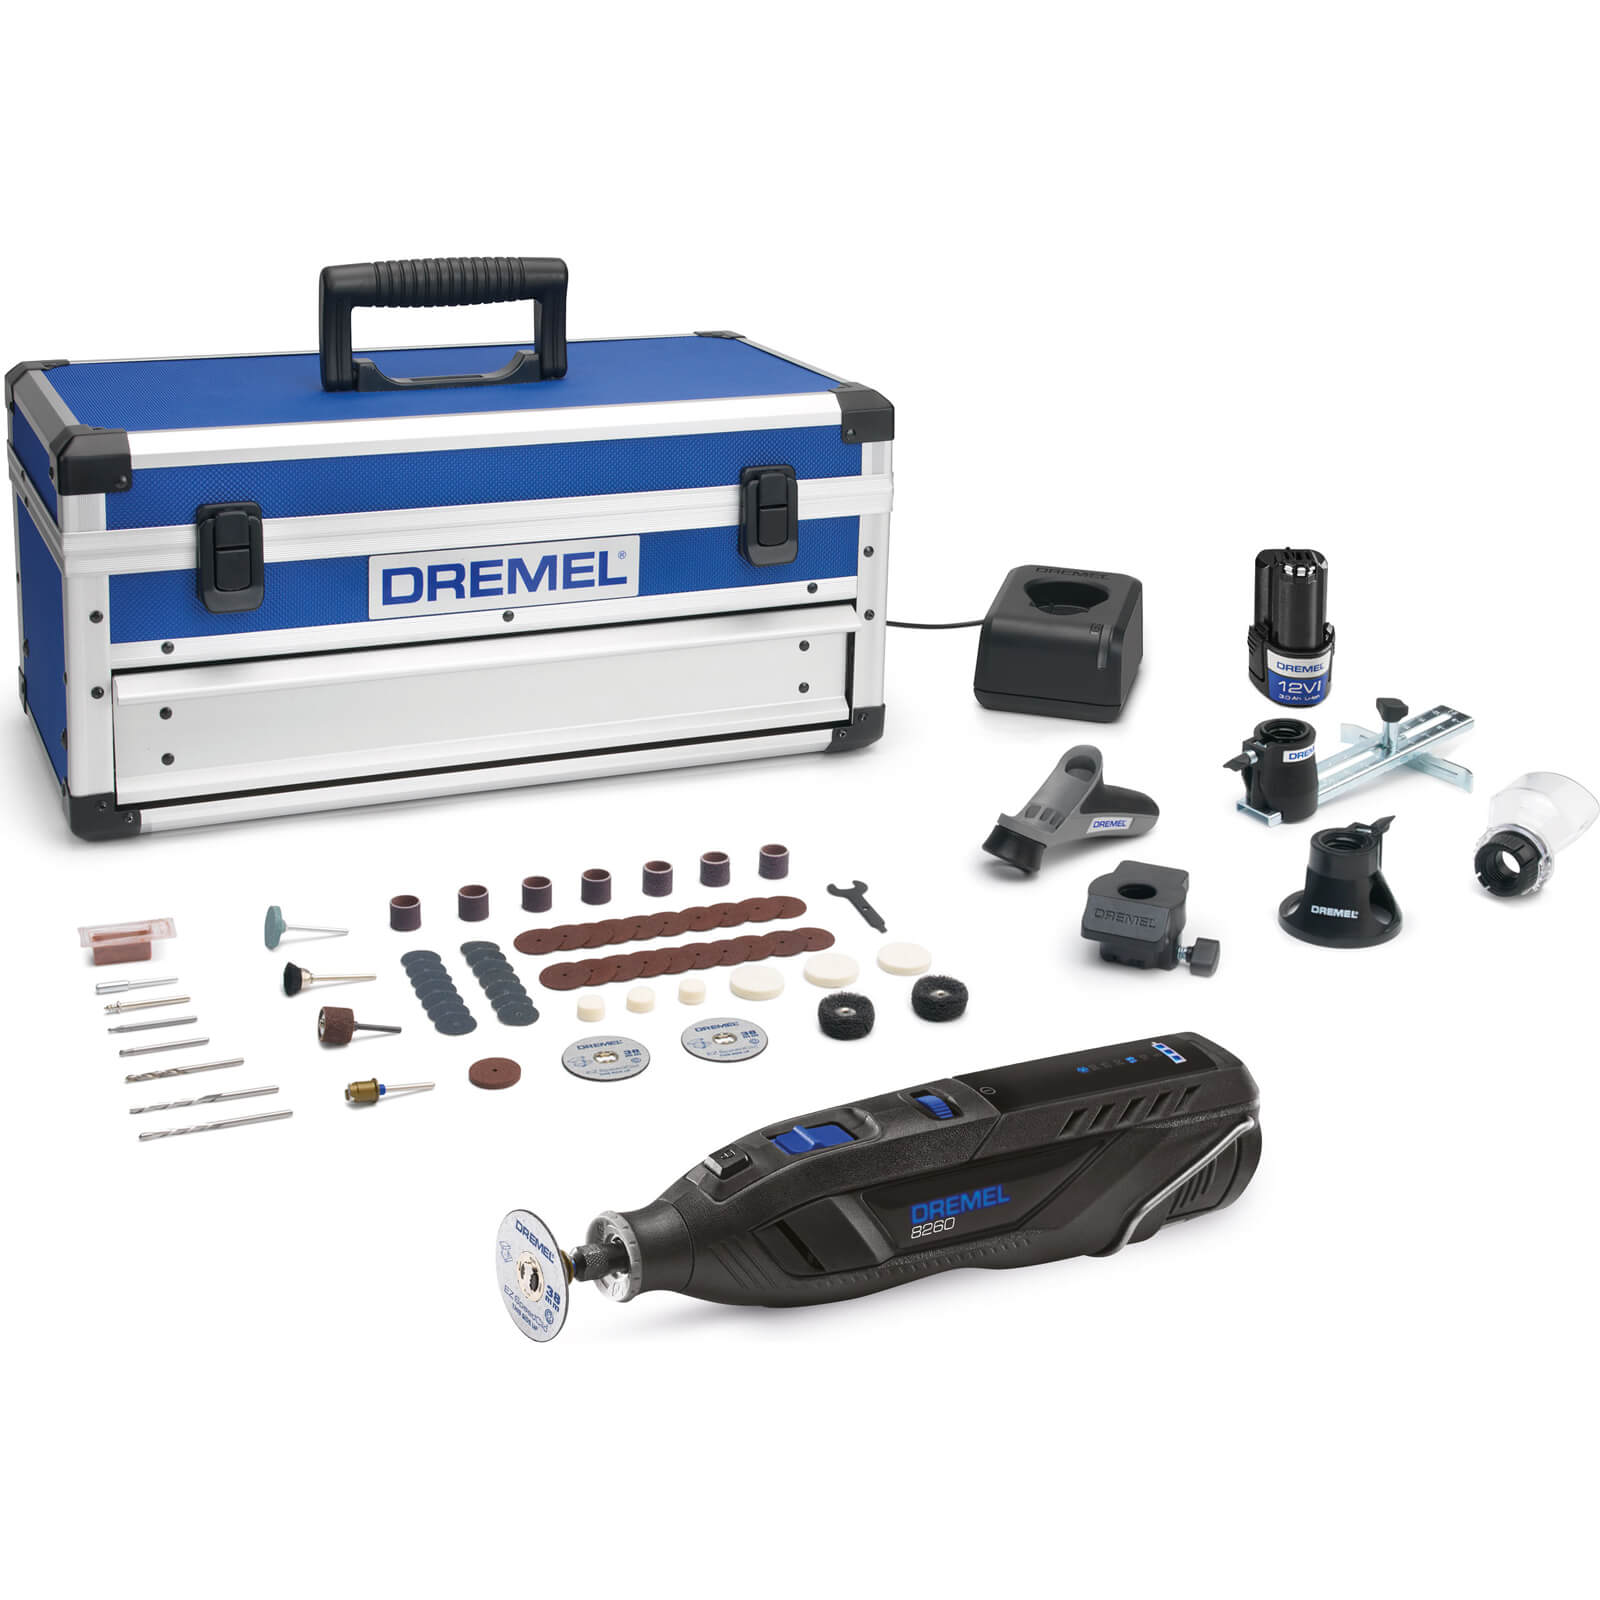 Dremel 8260 12v Cordless Brushless Rotary Multi Tool and 65 Accessory Platinum Kit 2 x 3ah Li-ion Charger Case